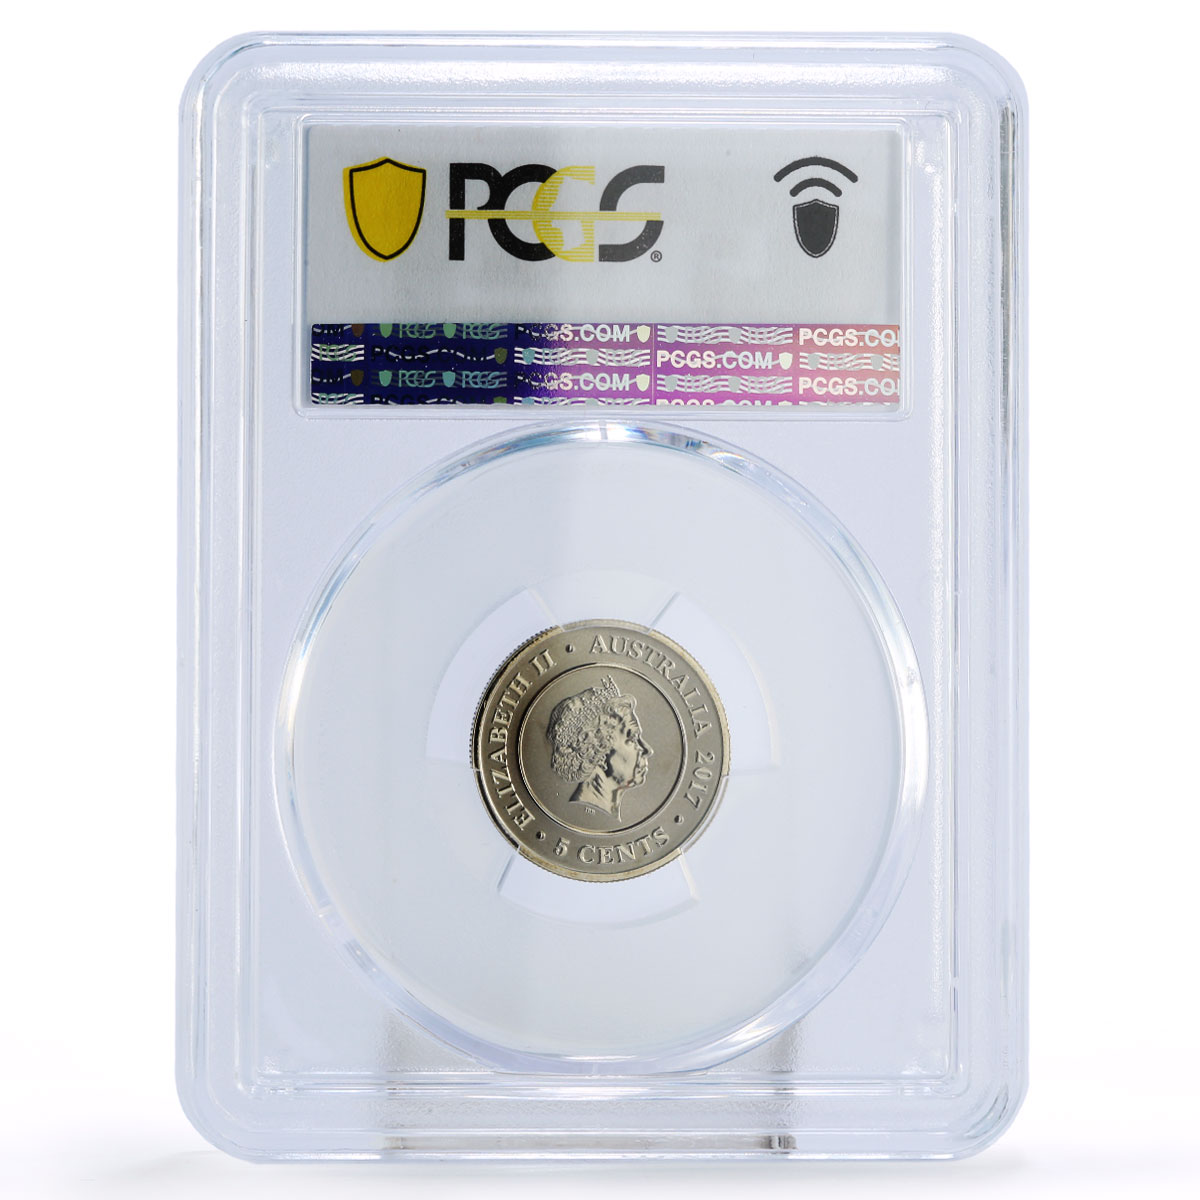 Australia 5 cents Planetary Coin Mercury Space MS69 PCGS CuNi coin 2017